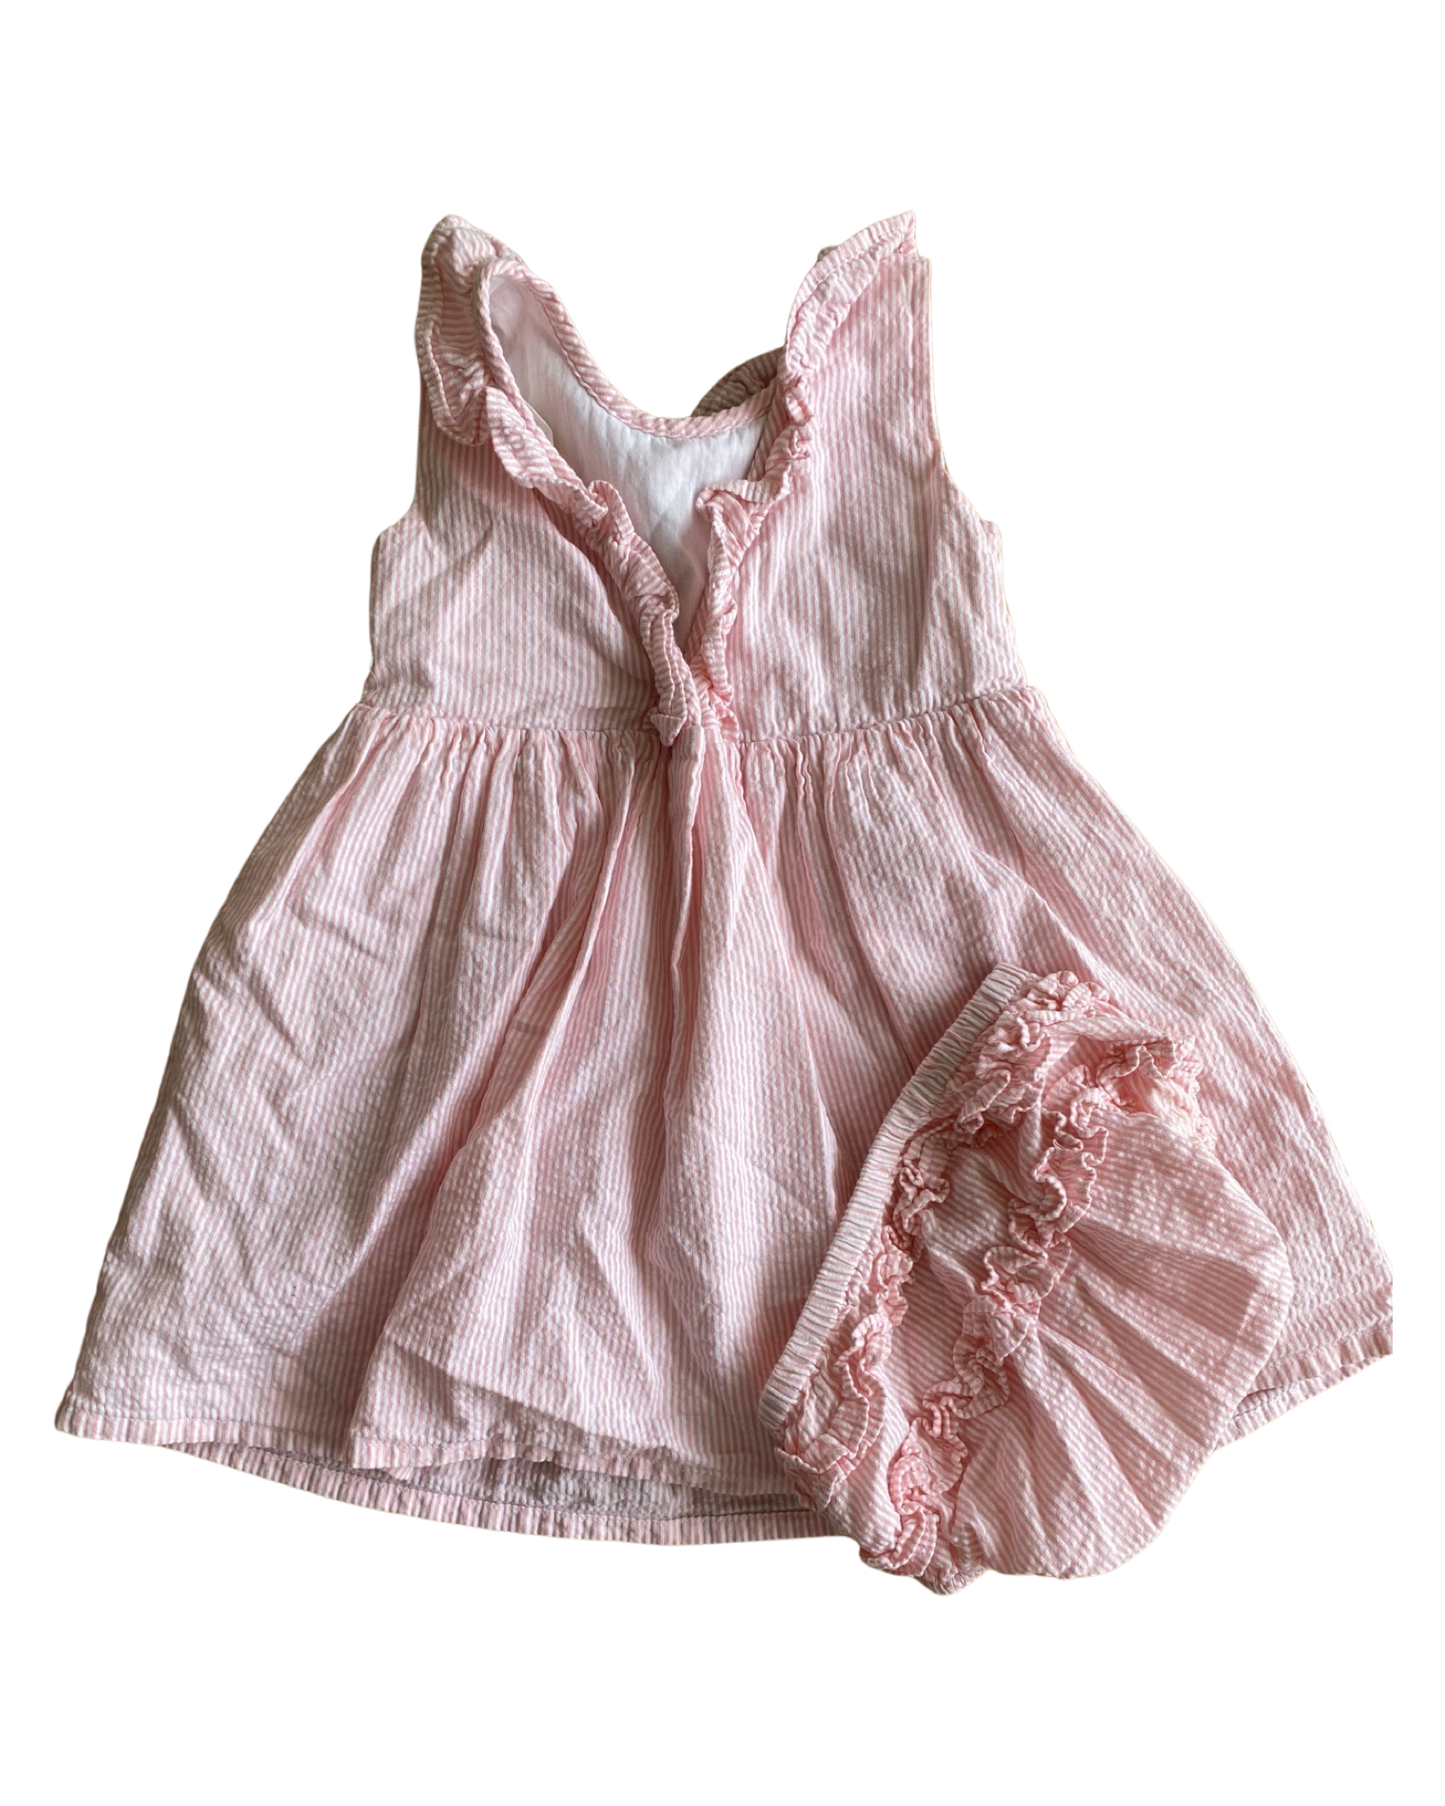 Baby Boden seersucker cotton dress with embroidered strawberries (12-18mths)